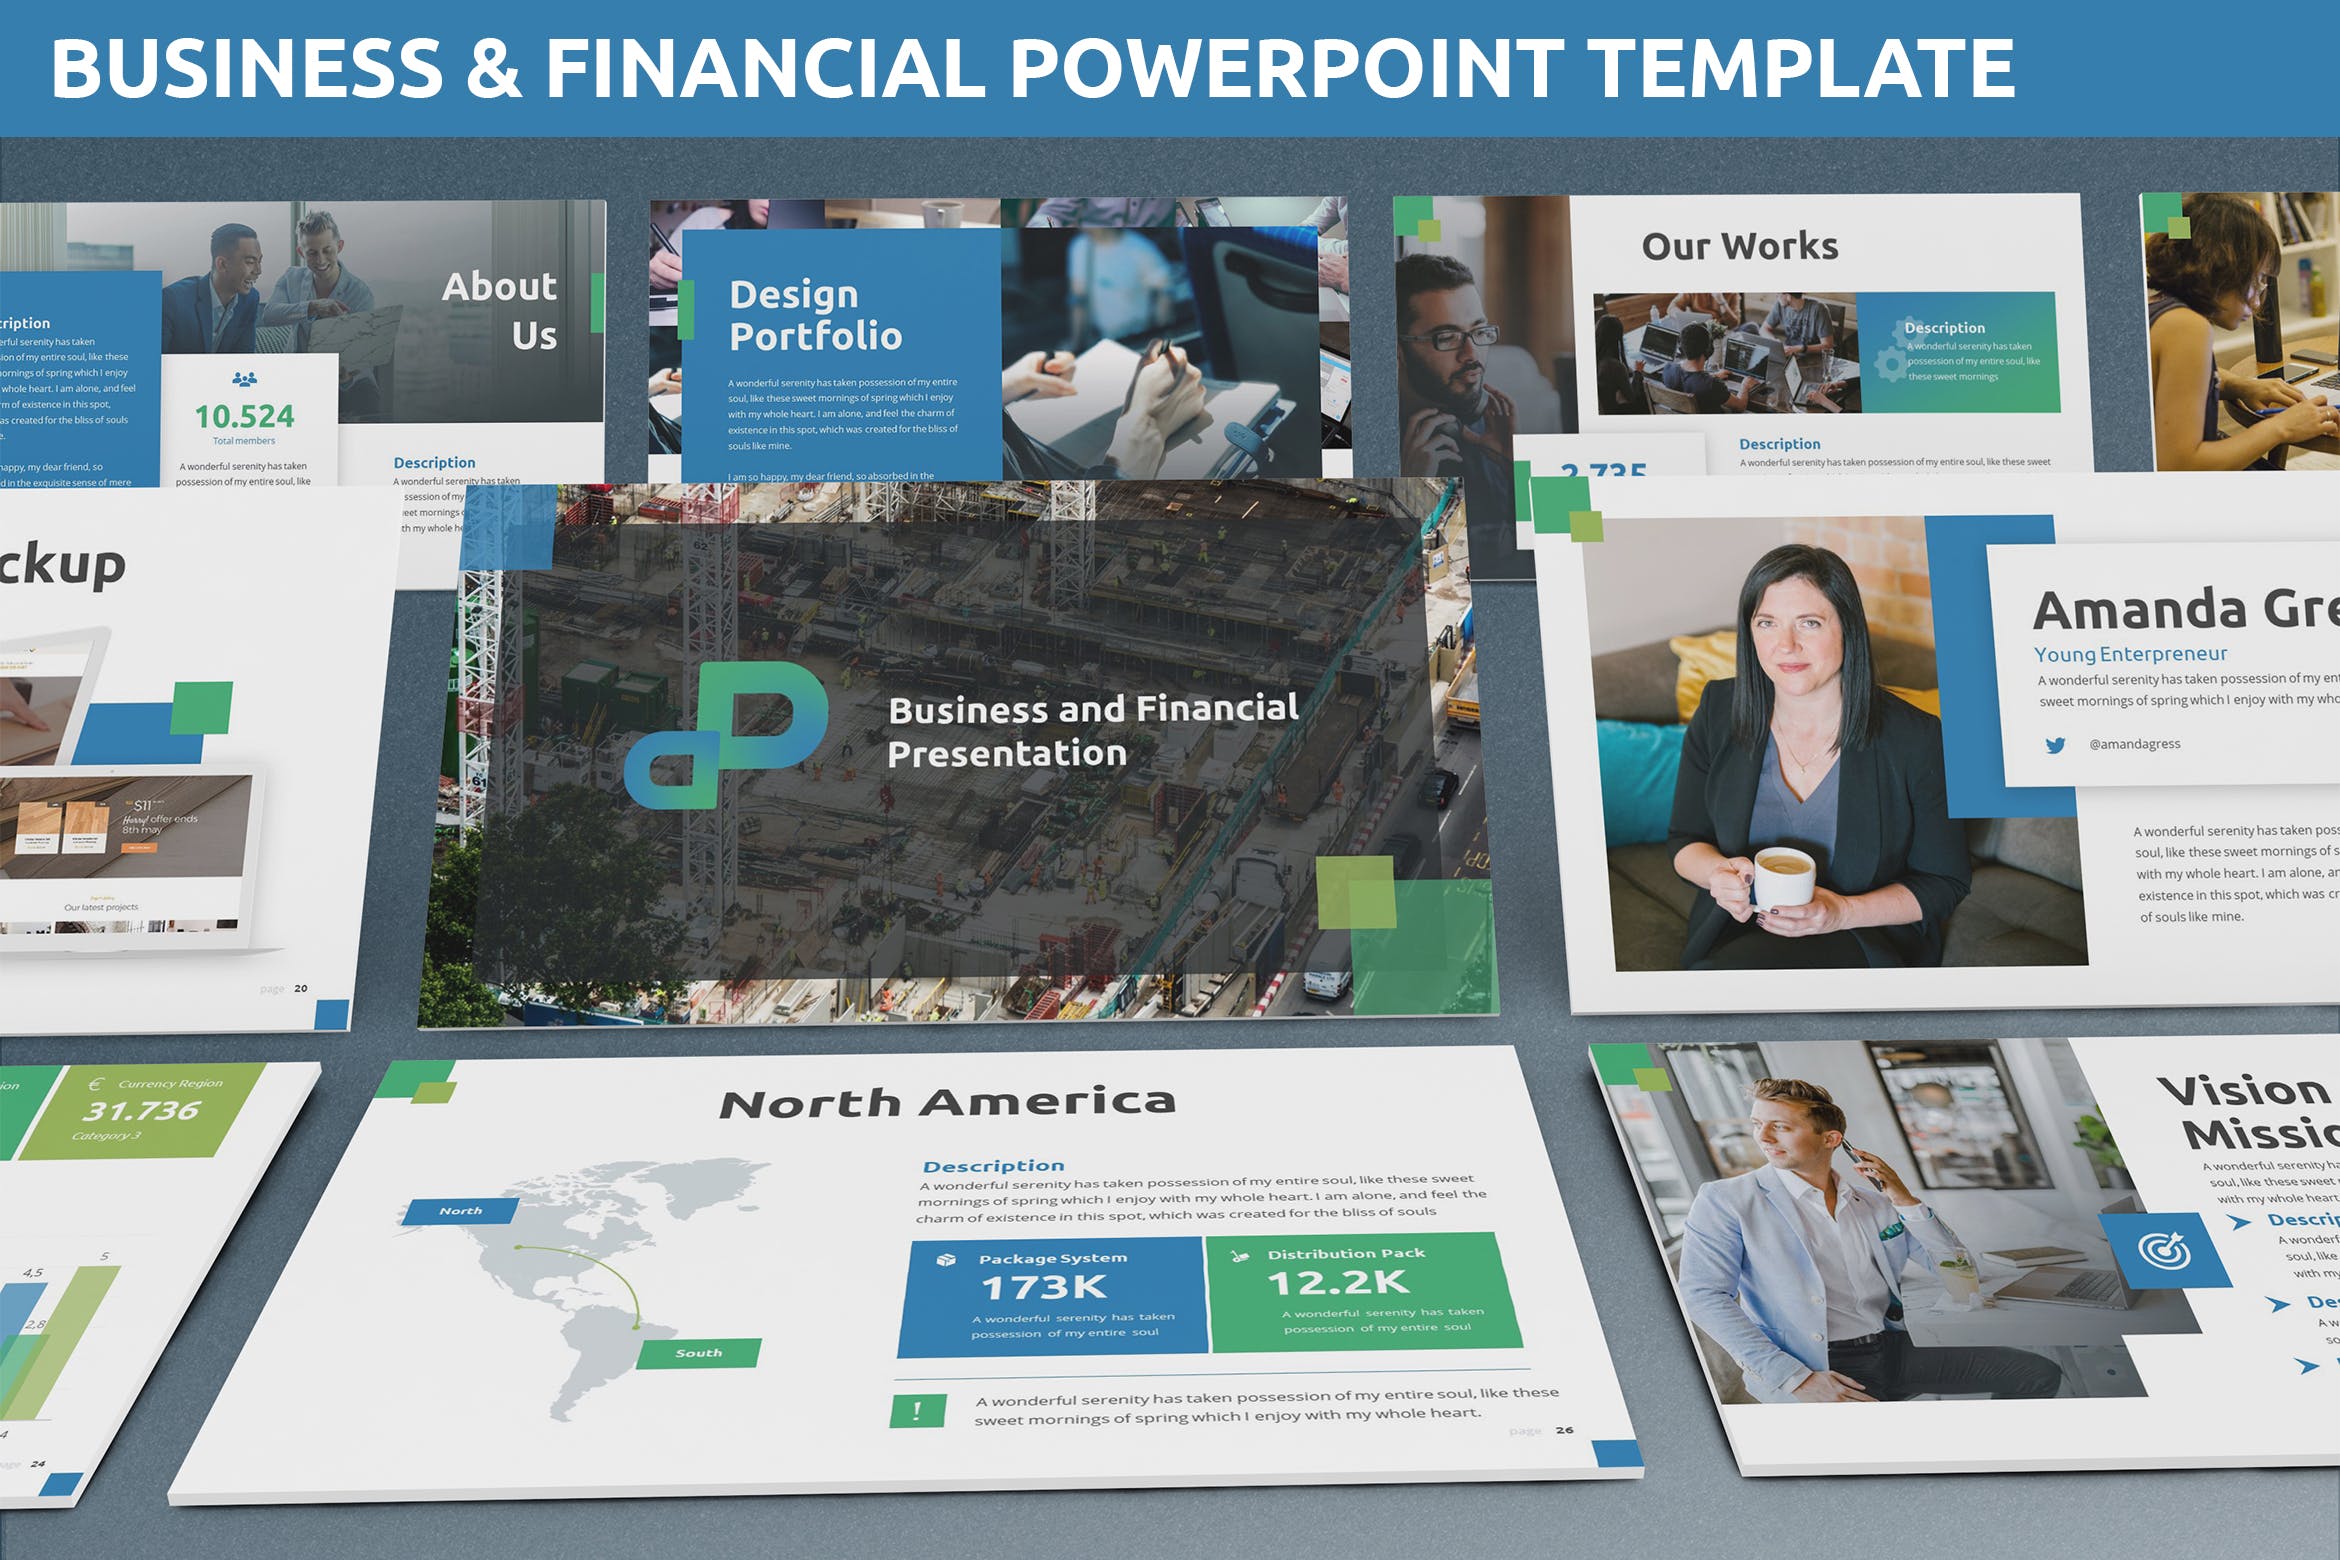 金融商务主题PPT幻灯片模板 Business & Financial Powerpoint Template插图